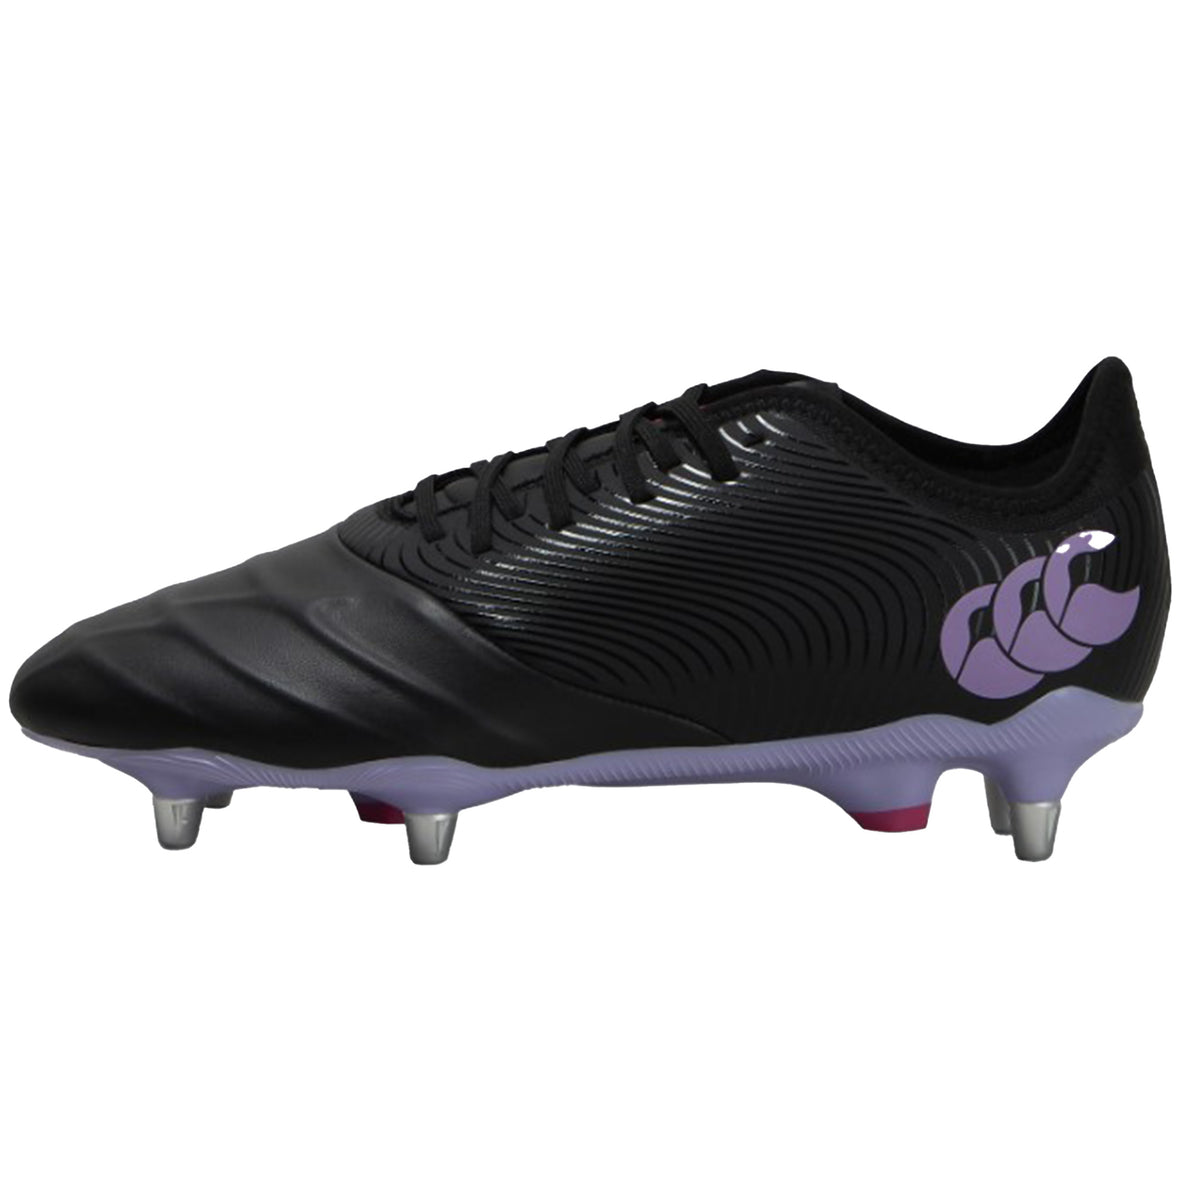 Canterbury Phoenix Genesis Pro Soft Ground Rugby Boots: Black/Purple